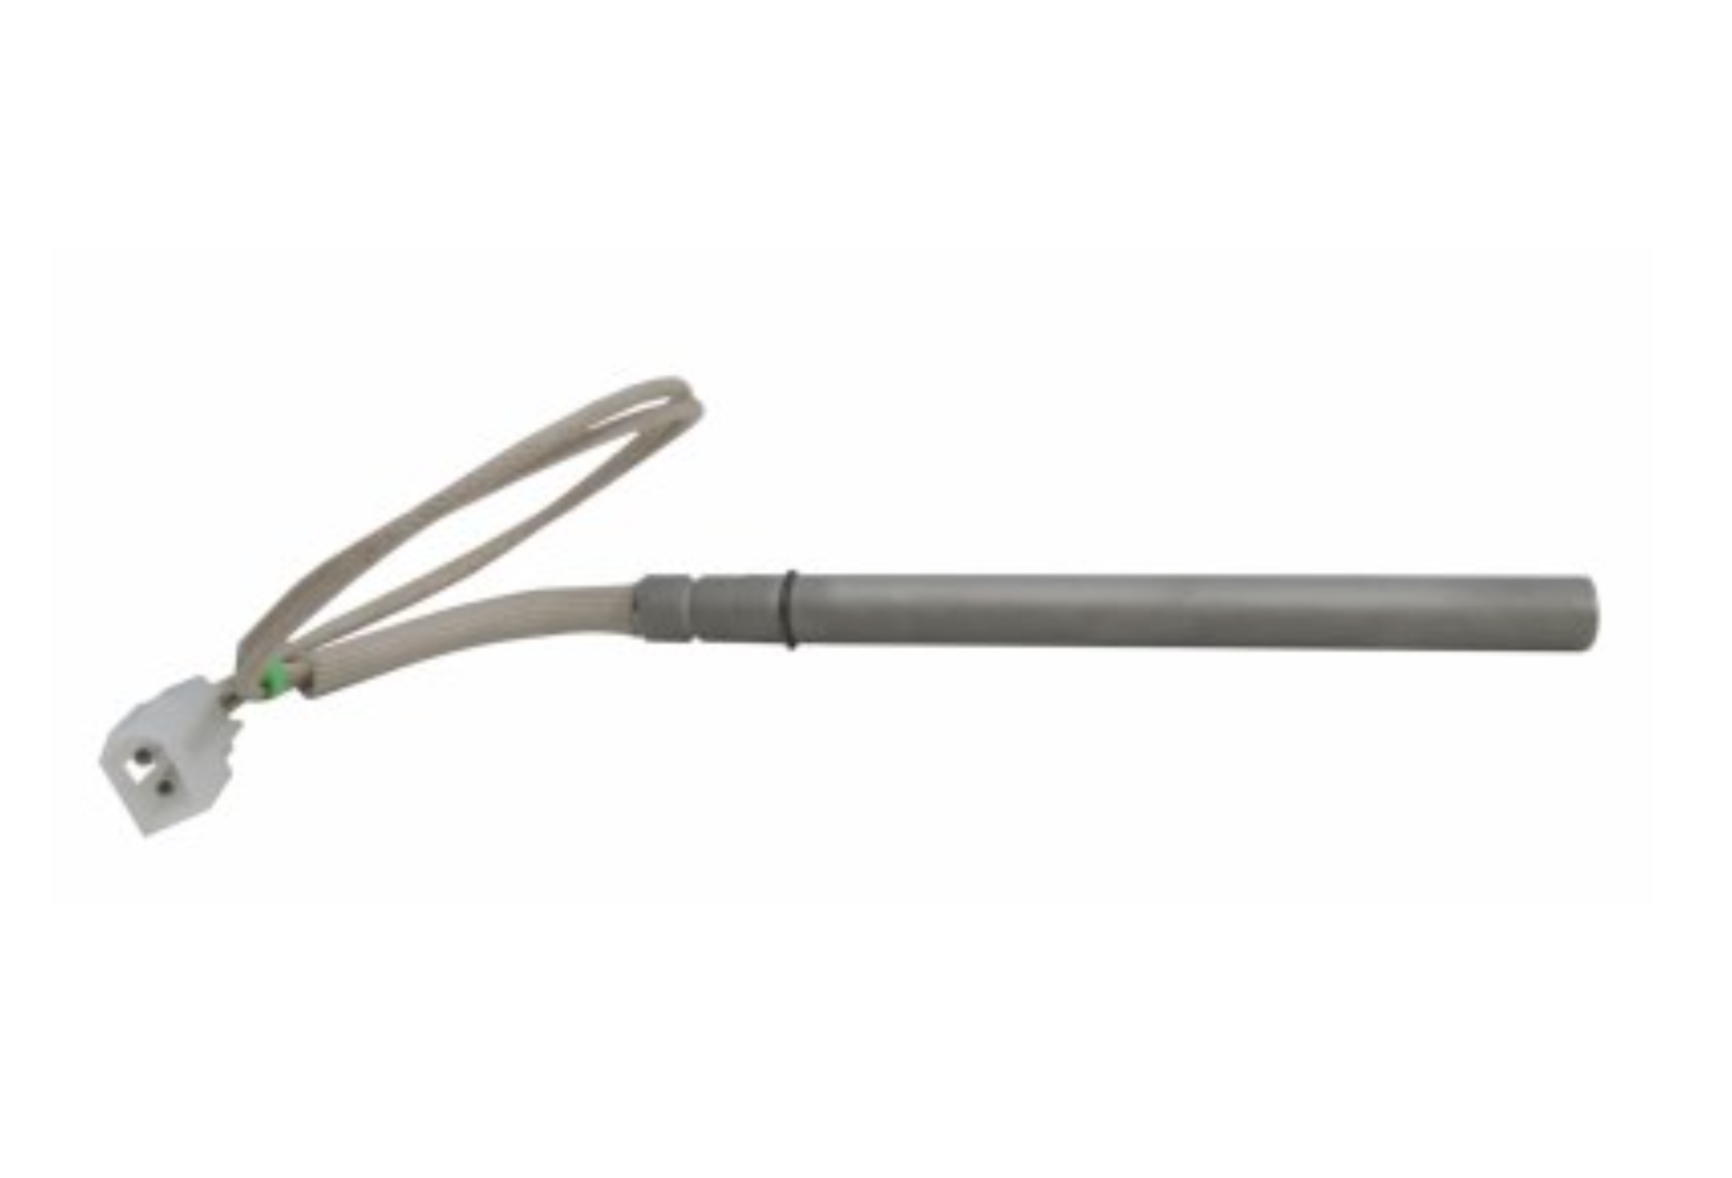 5030-1061 Pellet Stove Hot Rod Igniter for Glow Boy 20117 KS-5030-1061 